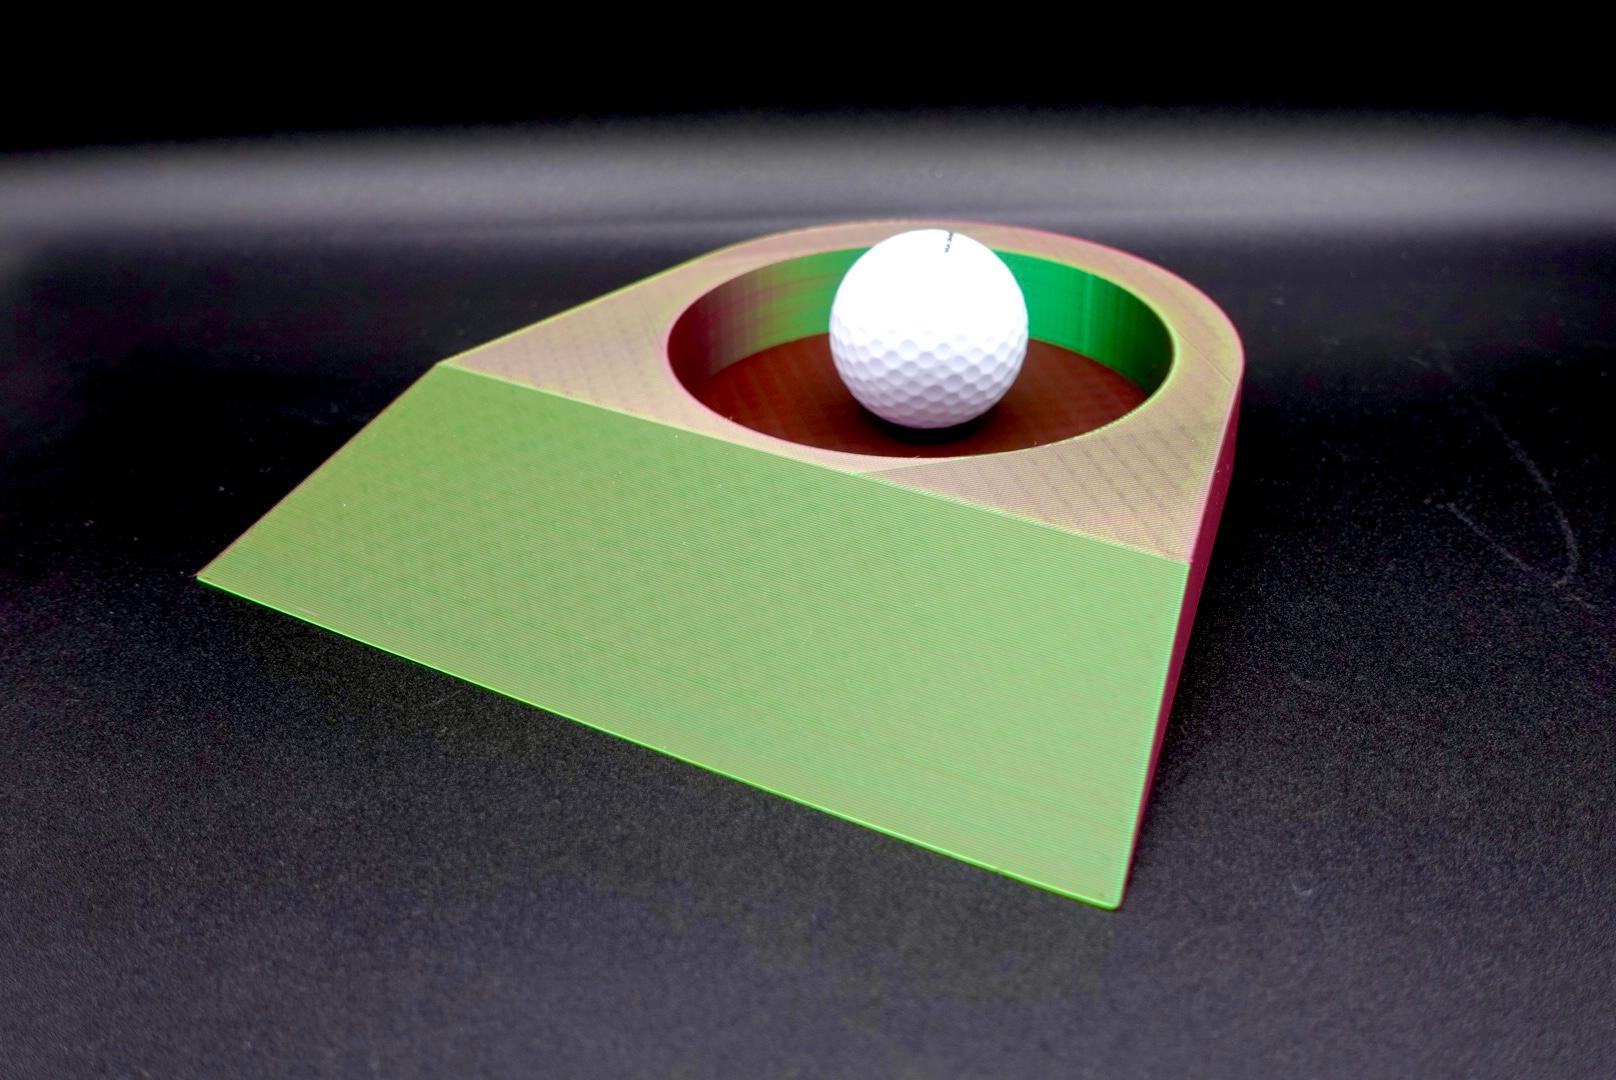 Practice Golf Holes 3d model